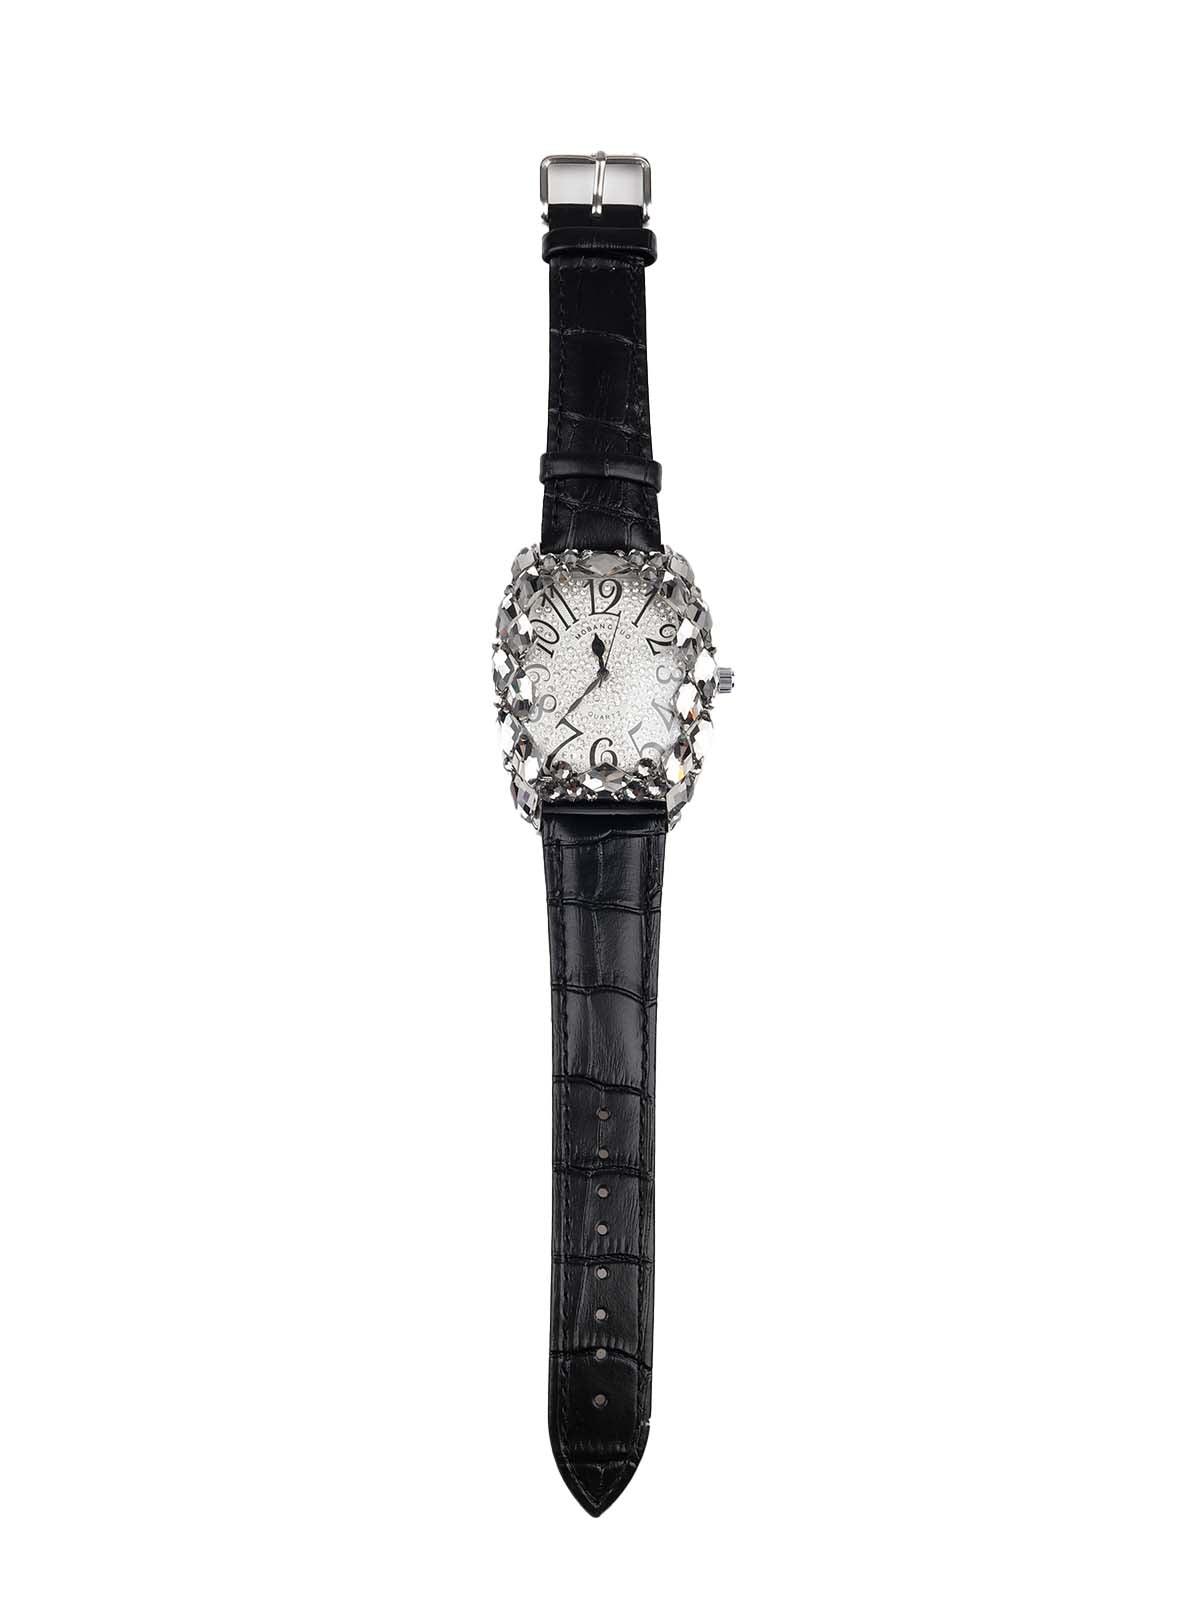 Textured black gorgeous wristwatch for women - Odette